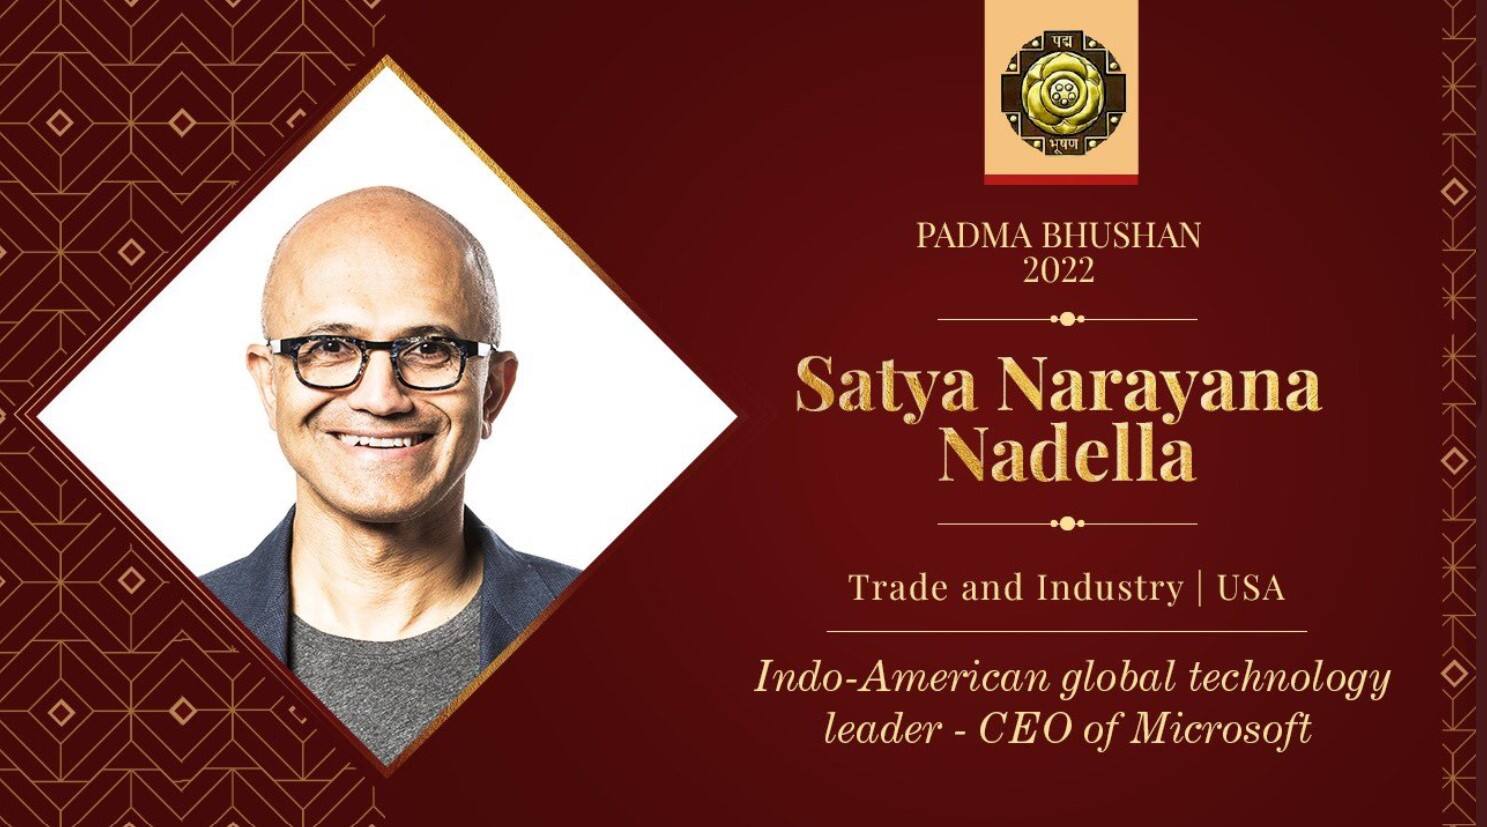 Satya Nadella awarded Padma Bhushan